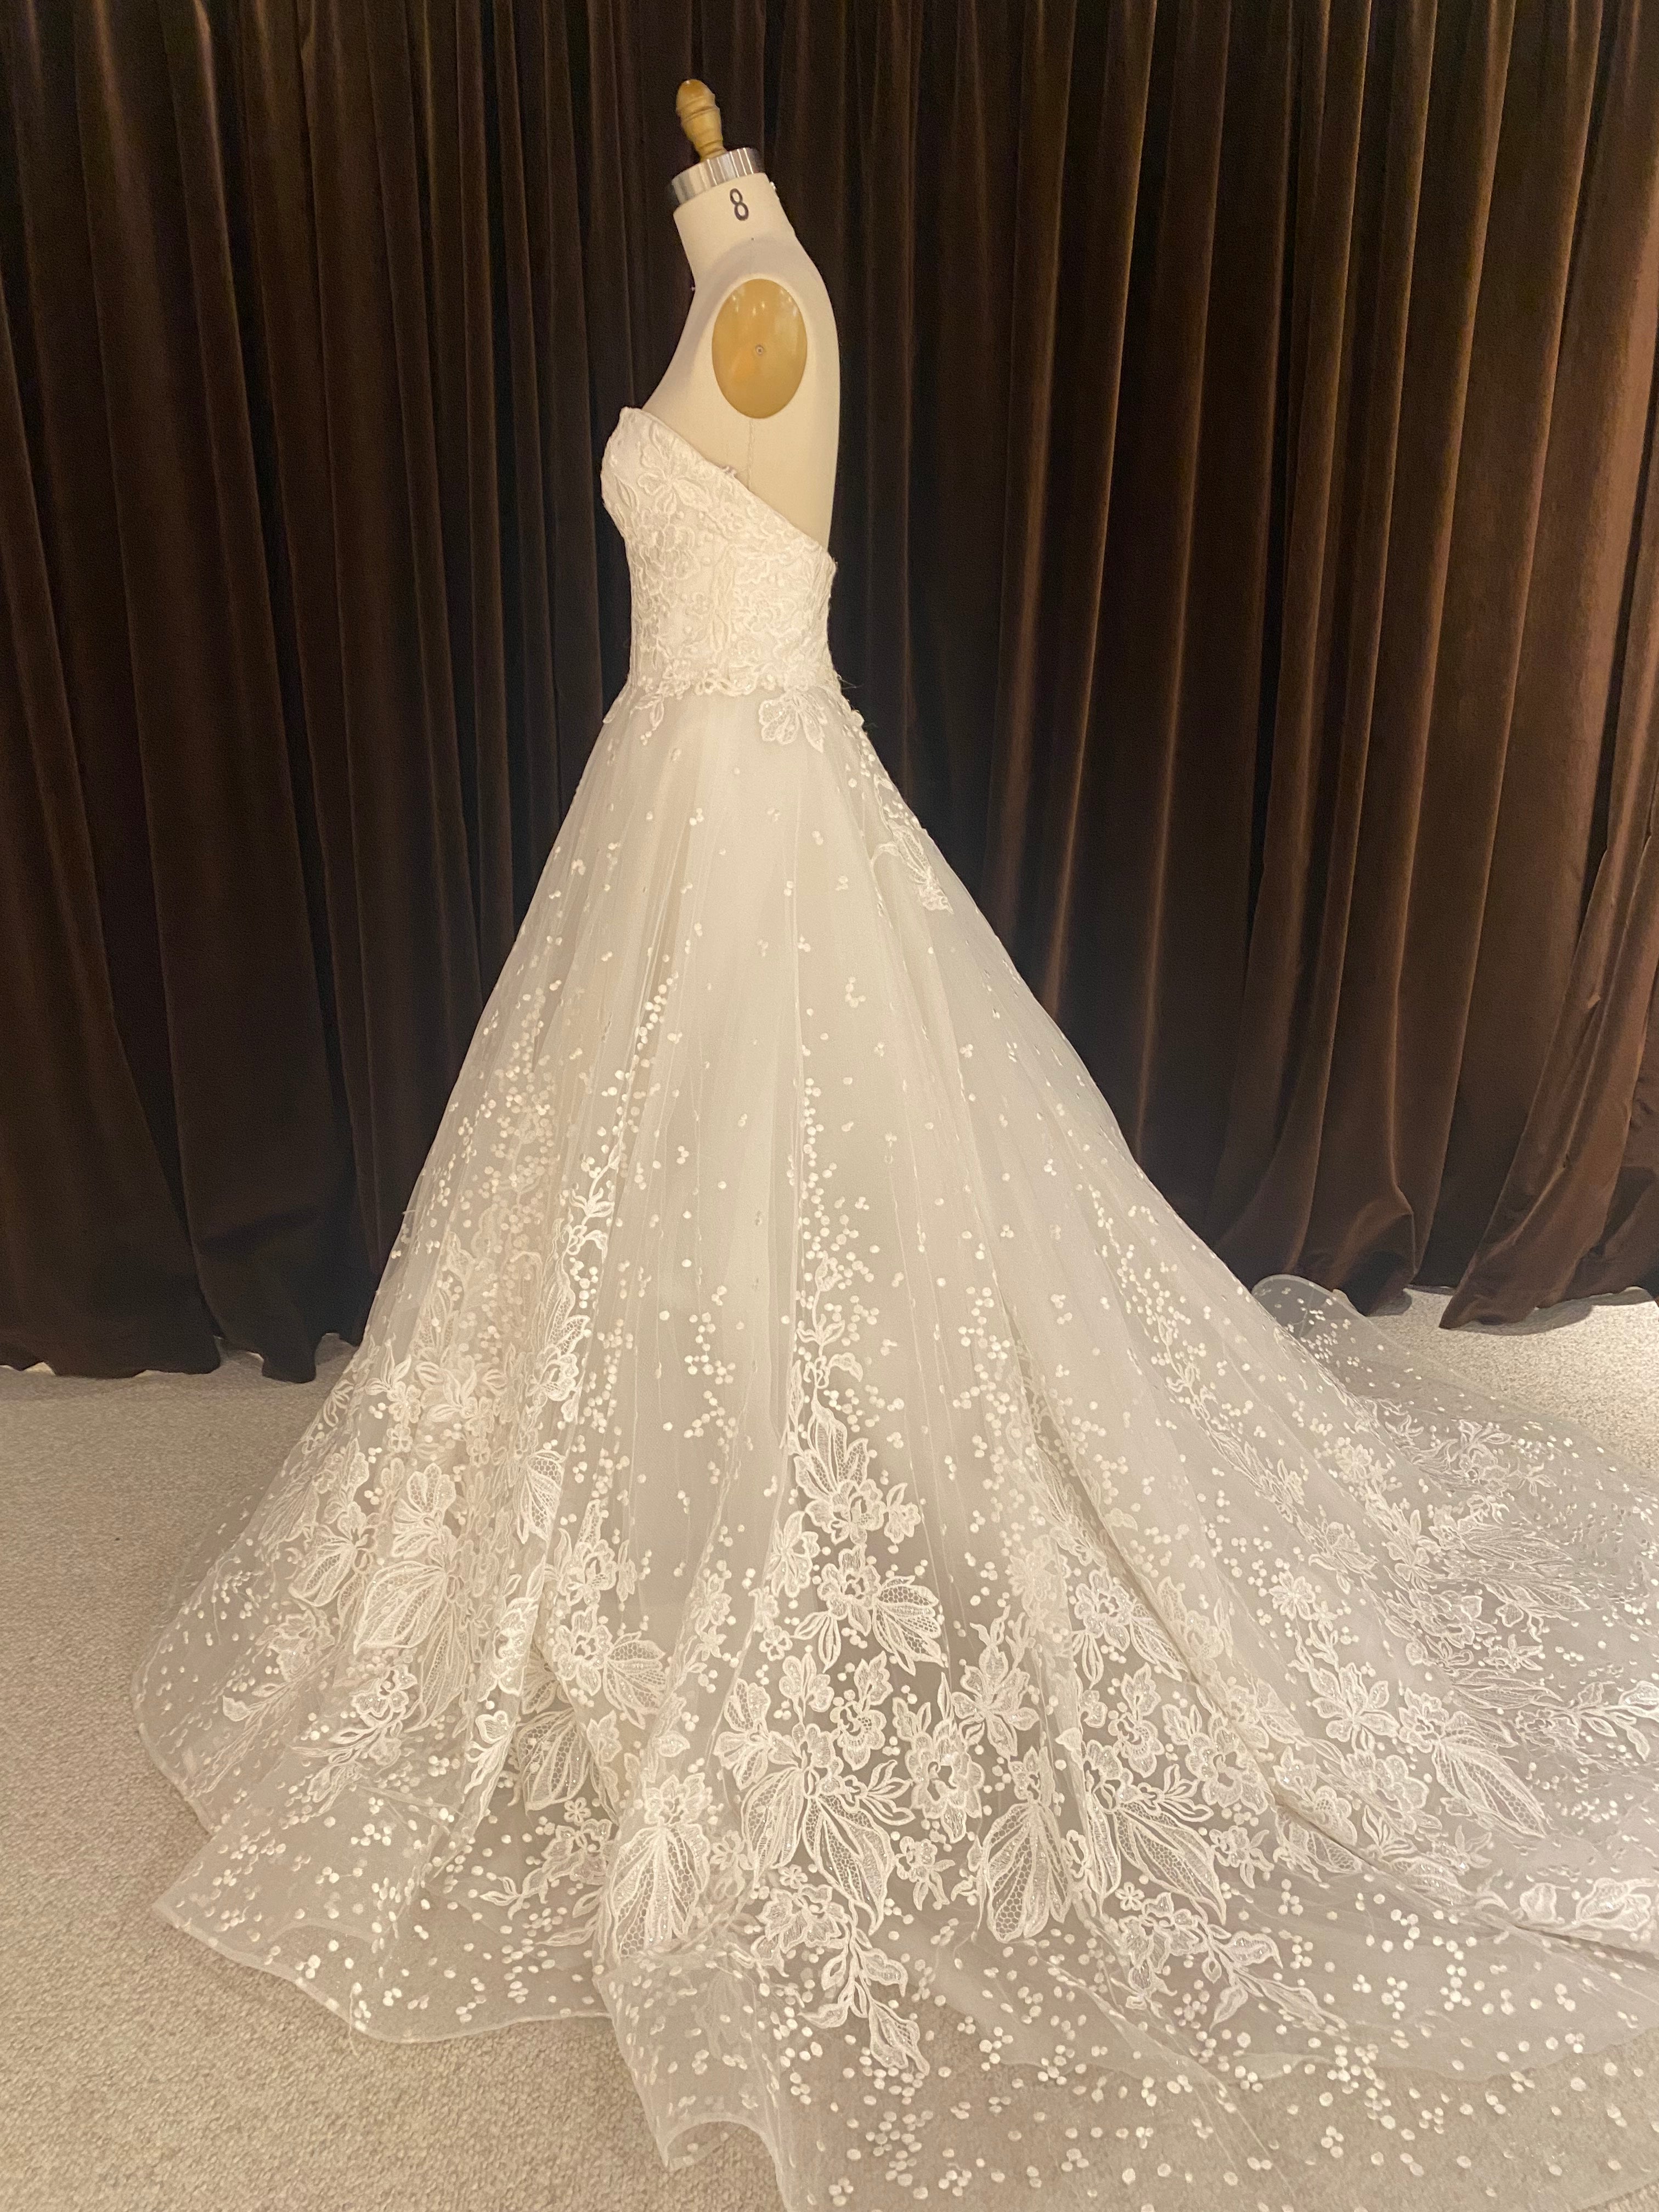 GC#34903 - Sareh Nouri Penelope Wedding Dress in Size 8